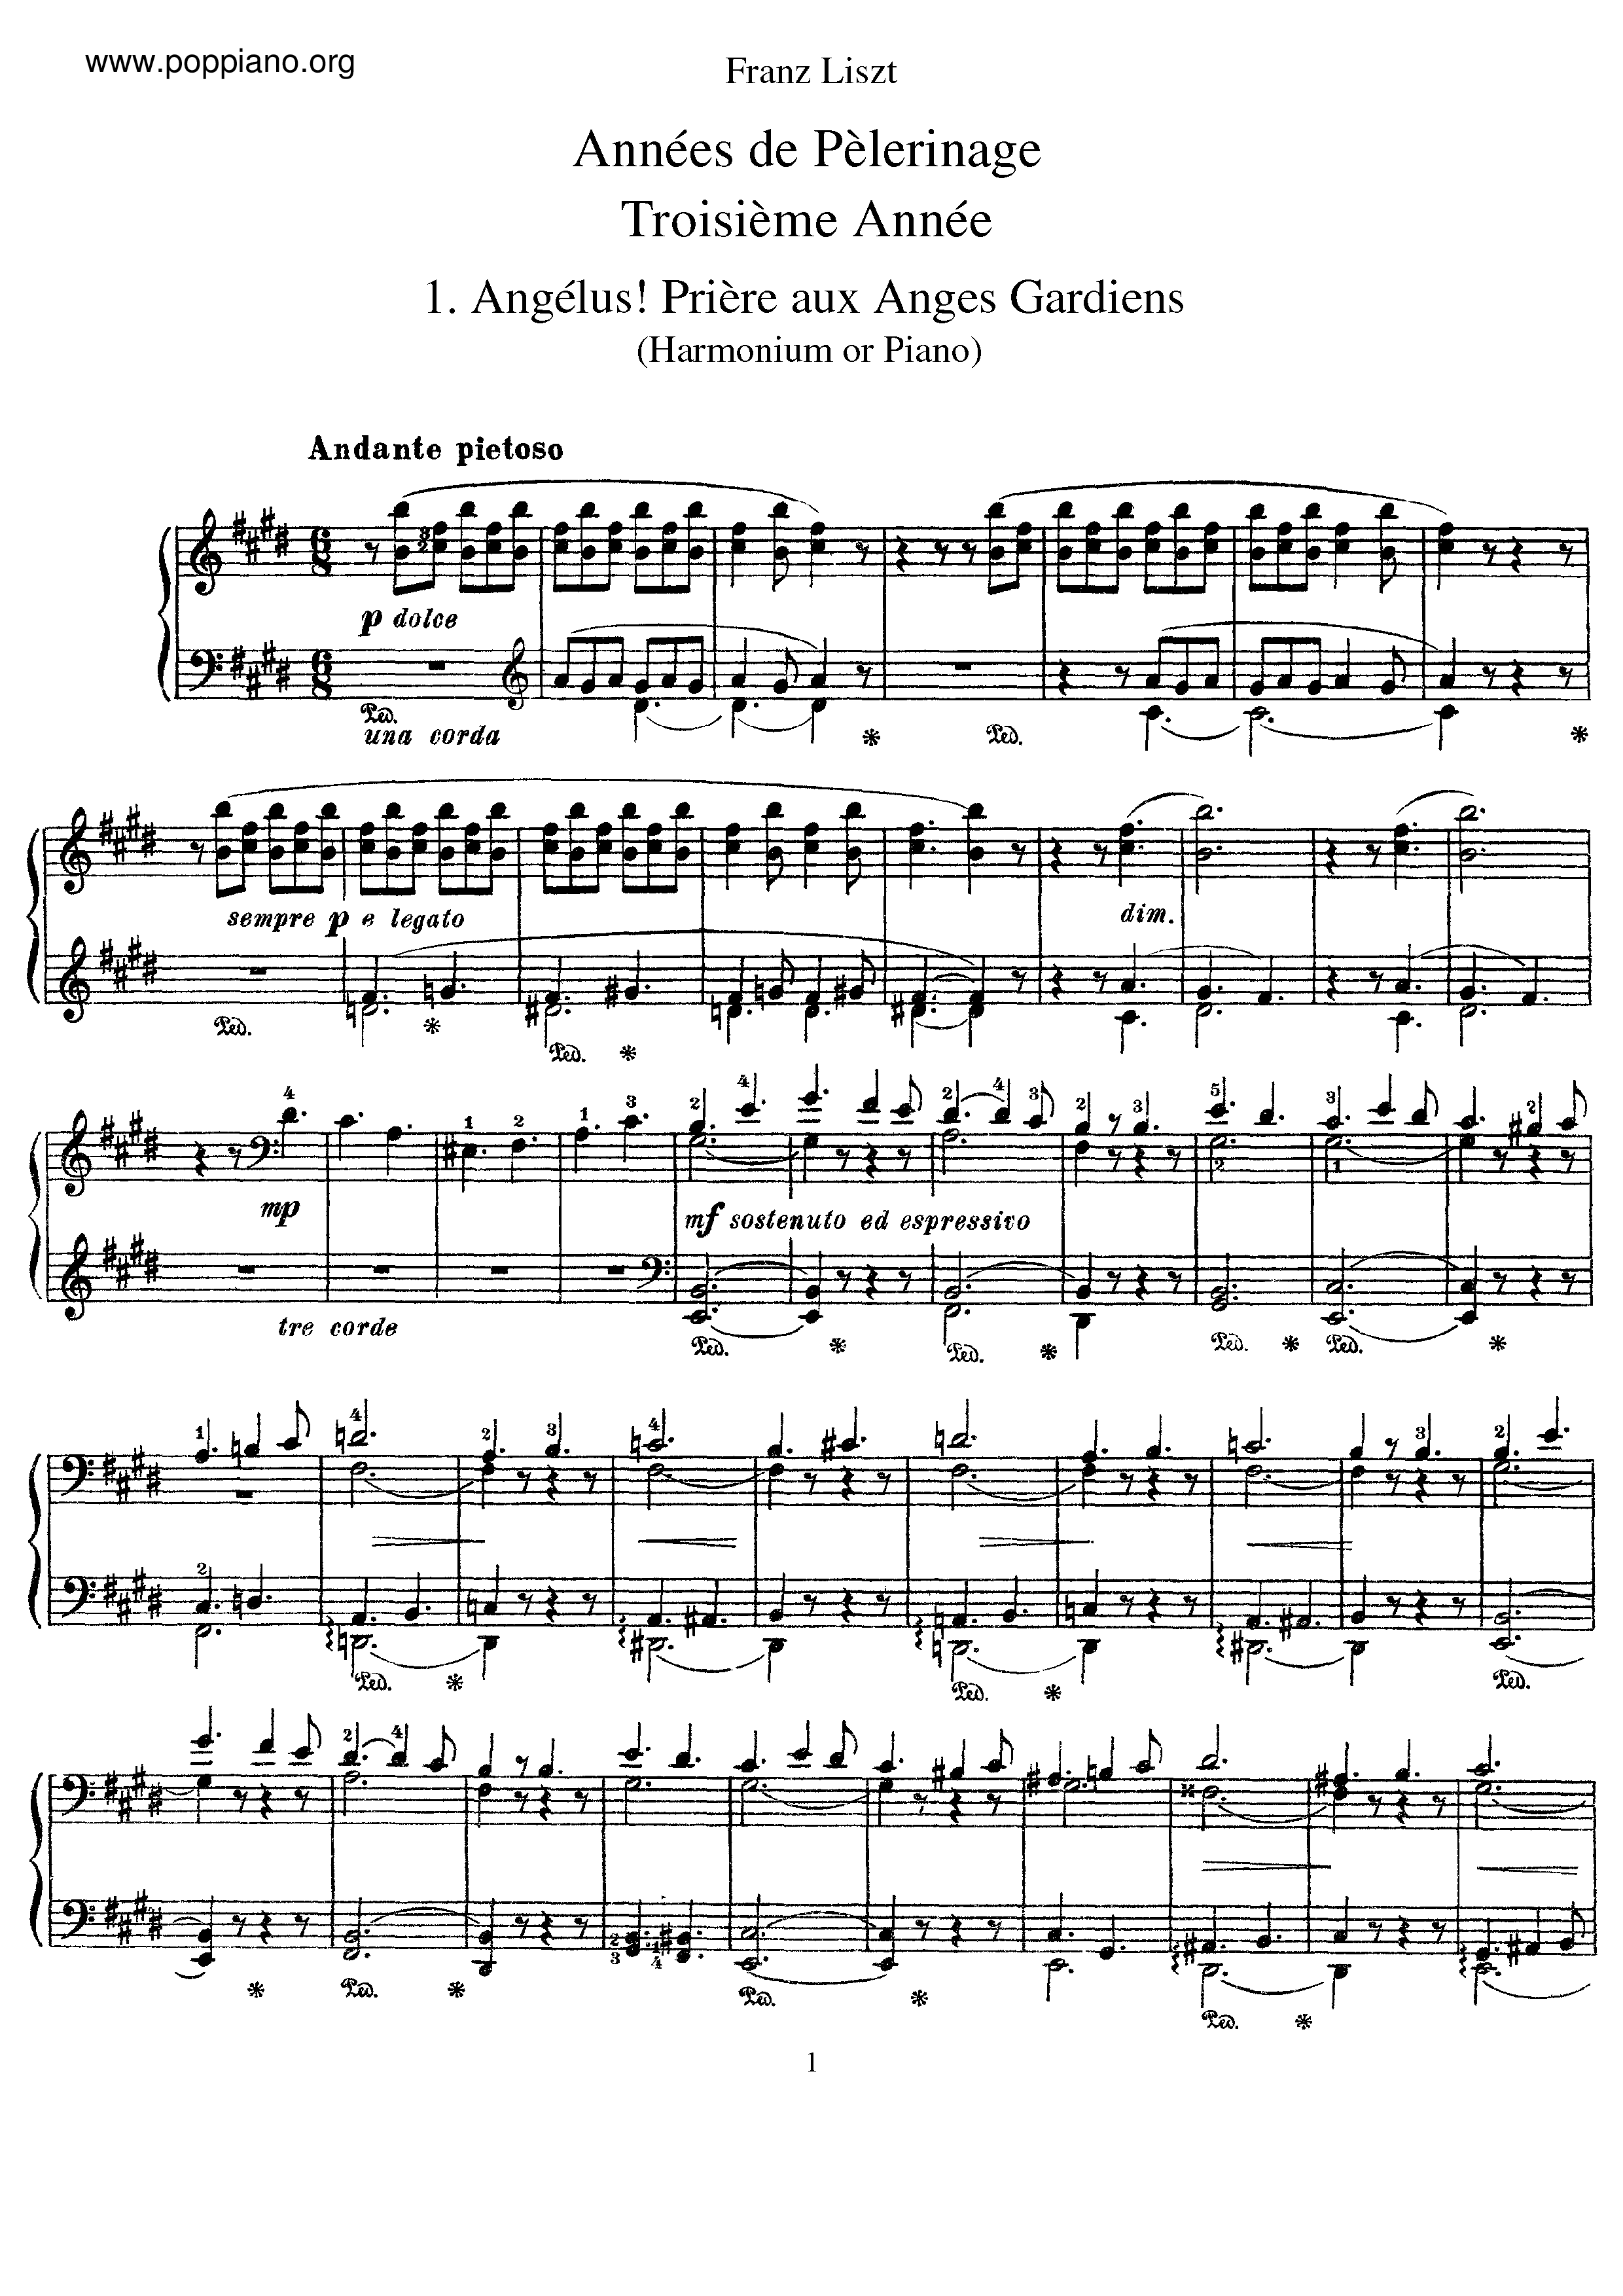 Troisieme Annee, S.163 Score